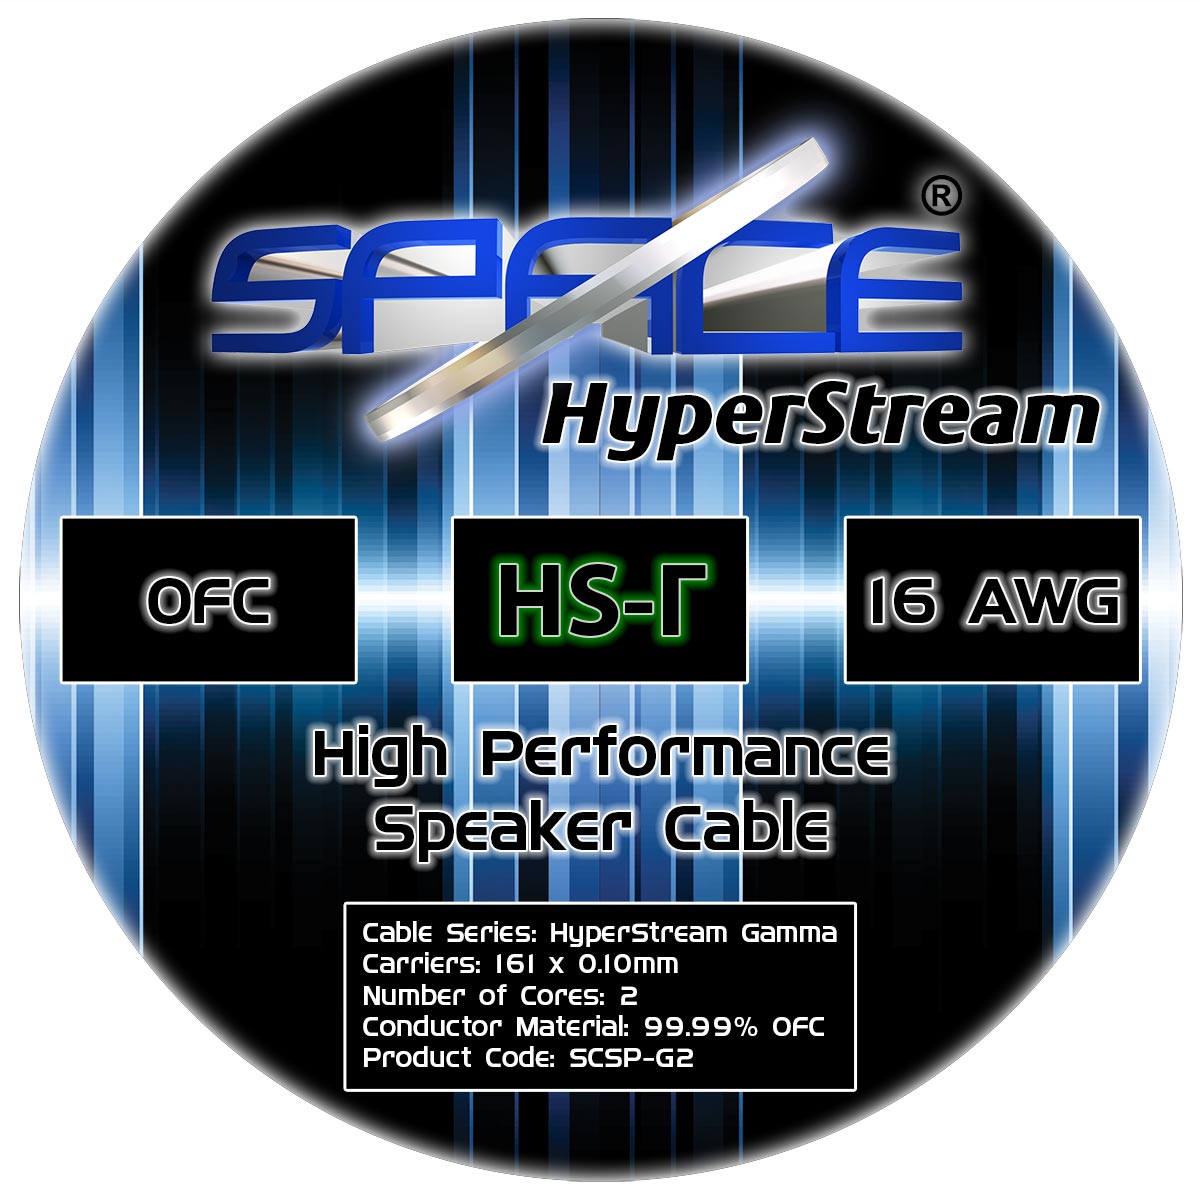 Justitie blozen salami Space HyperStream Gamma 16 AWG Speaker Cable | Space Hi-Fi